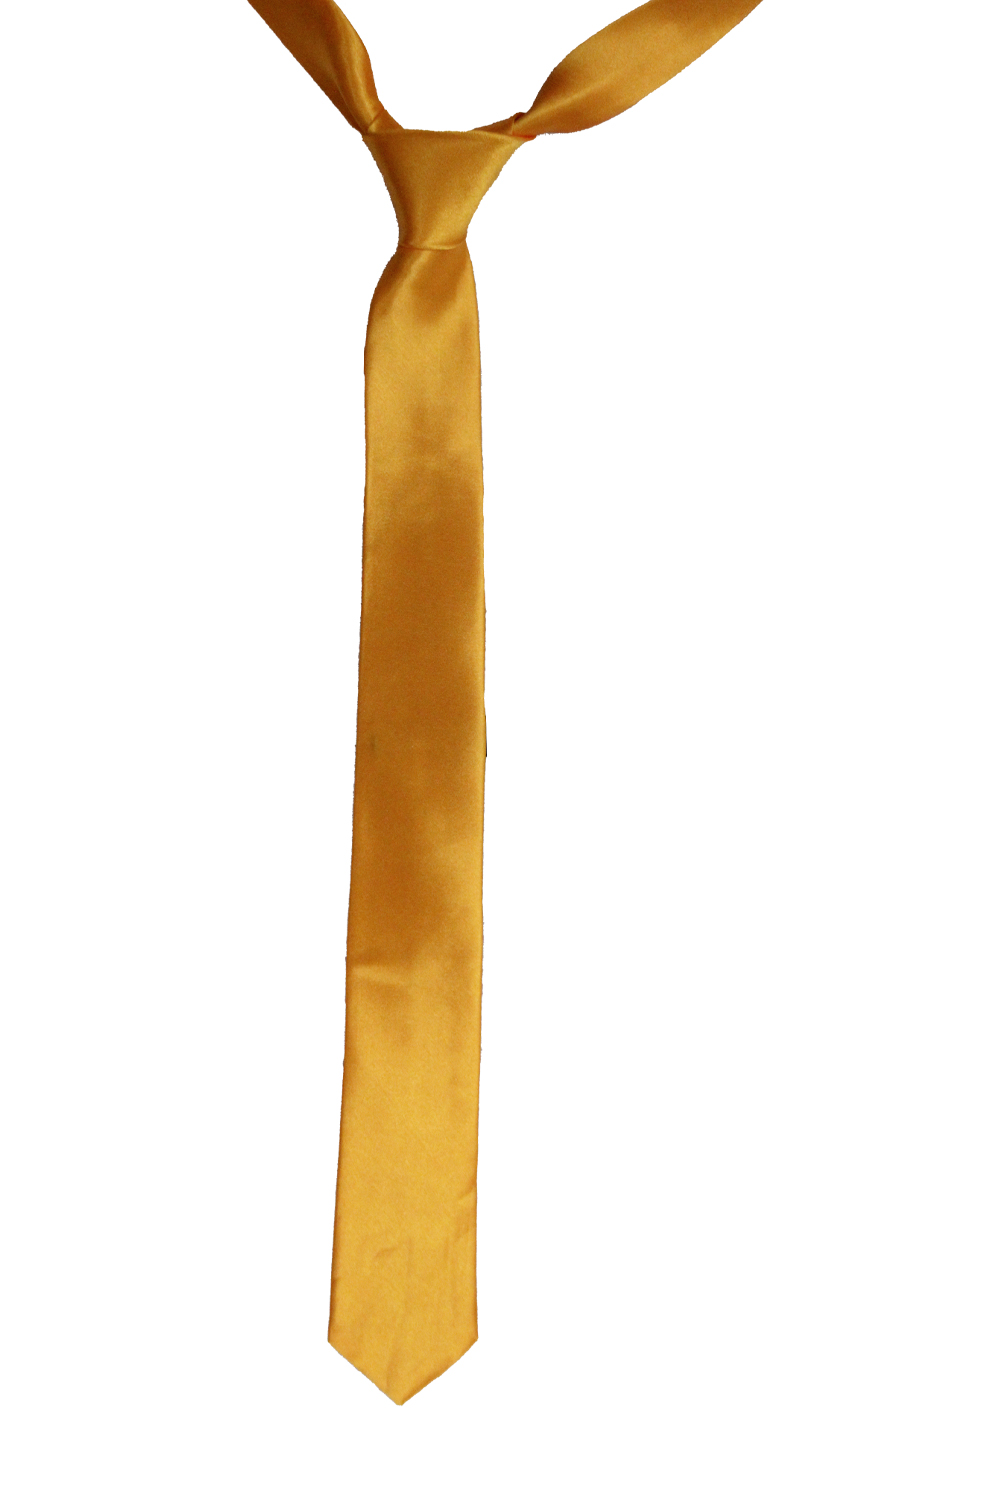 Wickedfun Satin Plain Golden Yellow Neck Tie